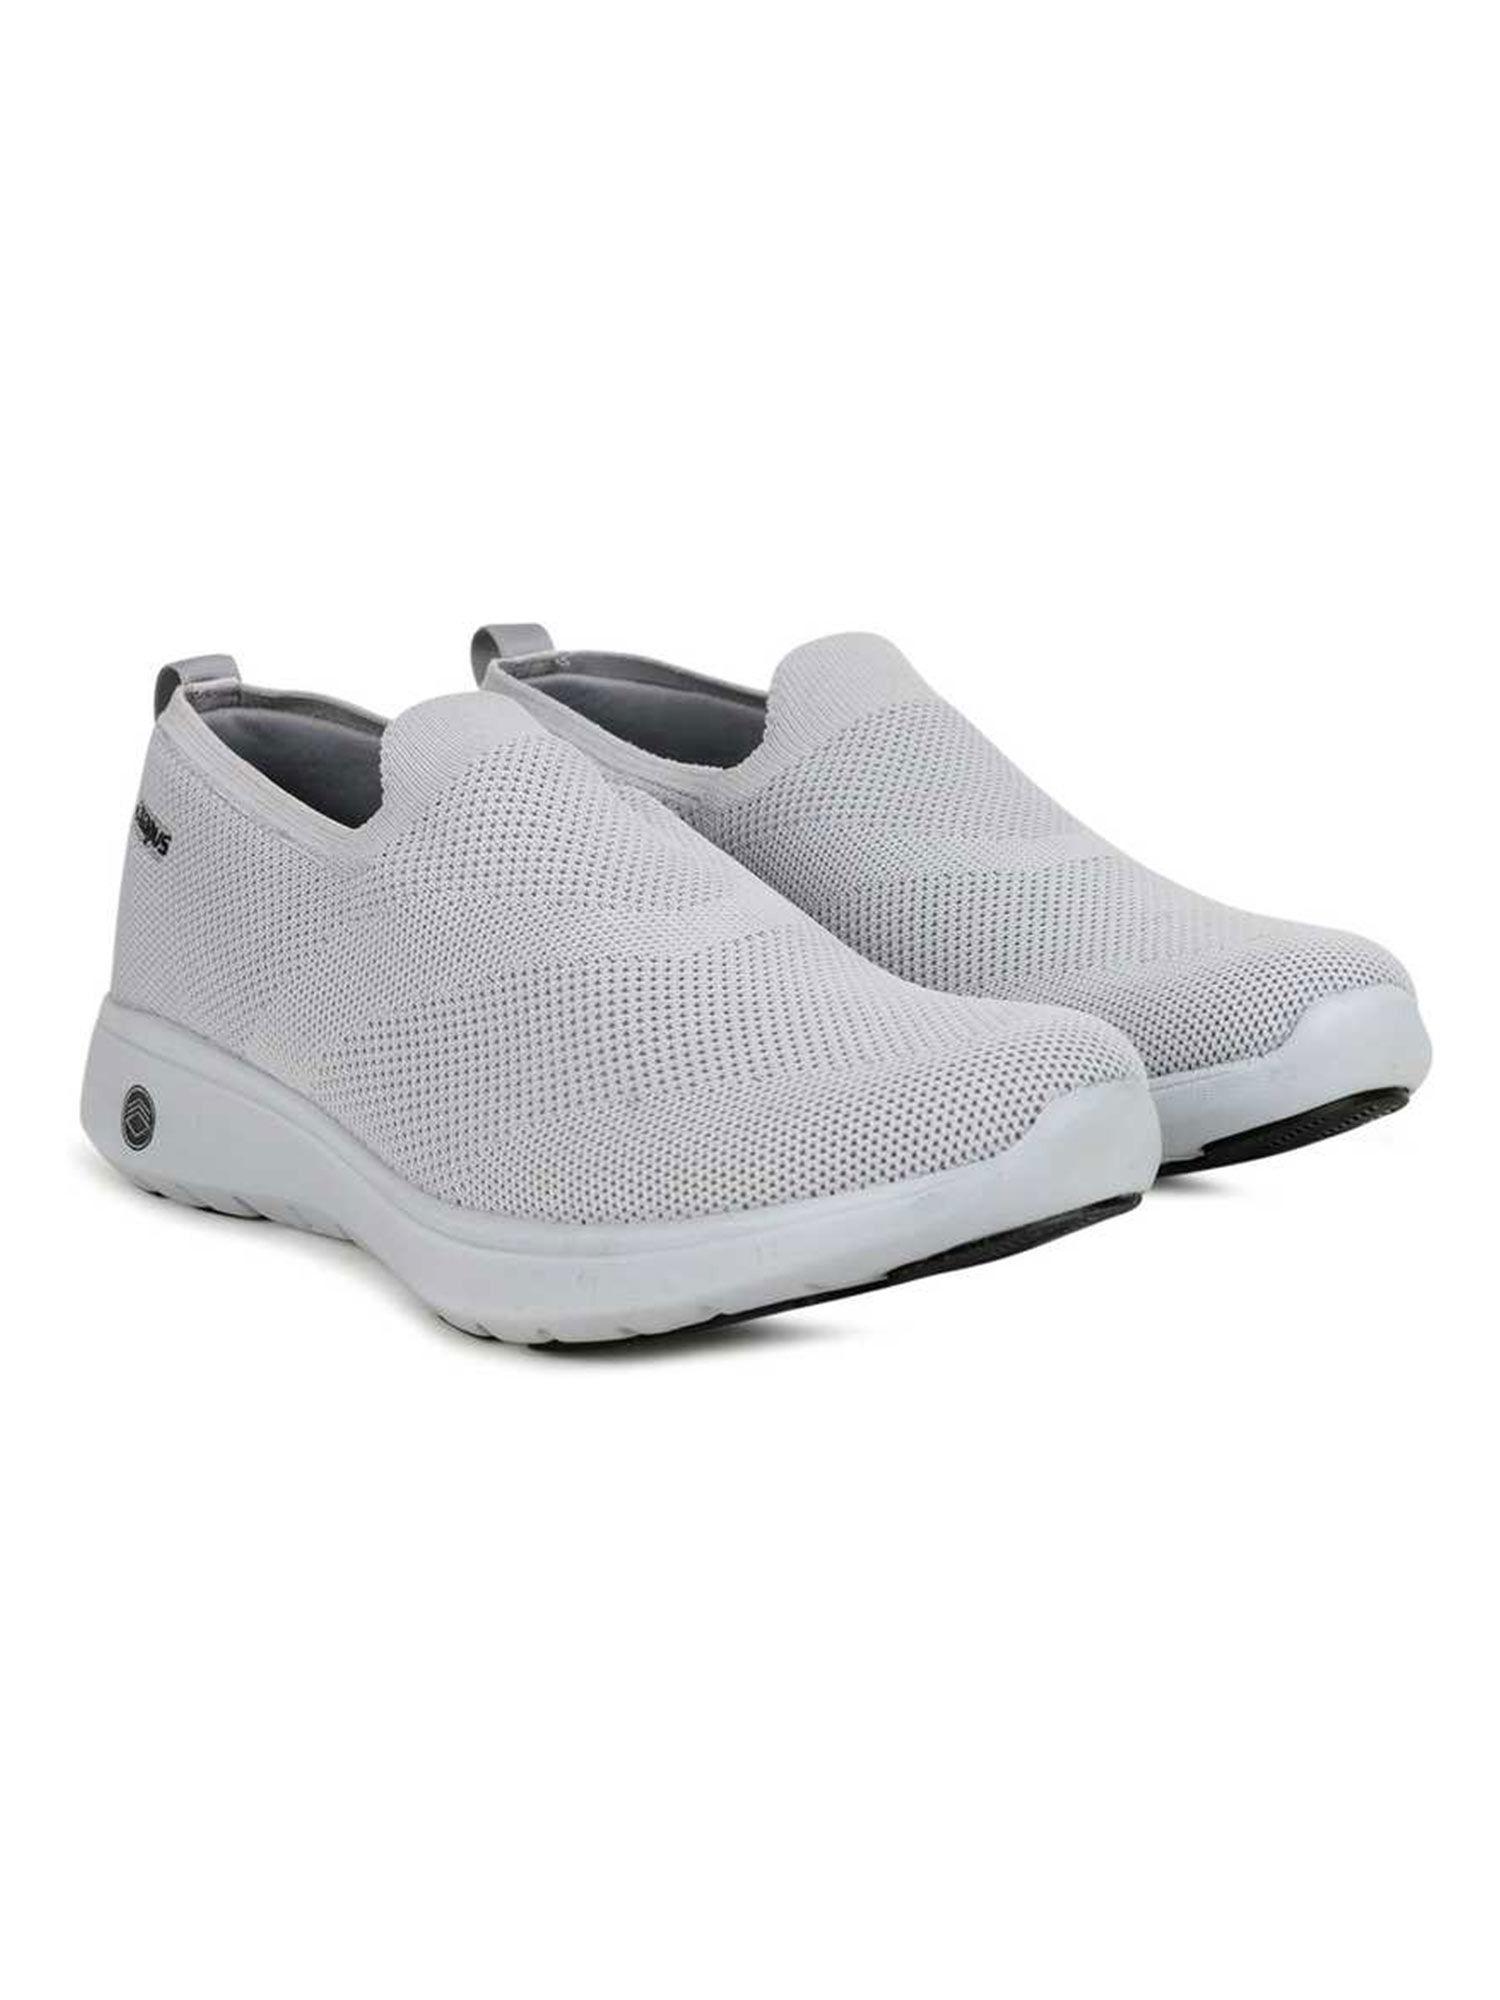 allen gray casual shoes for men